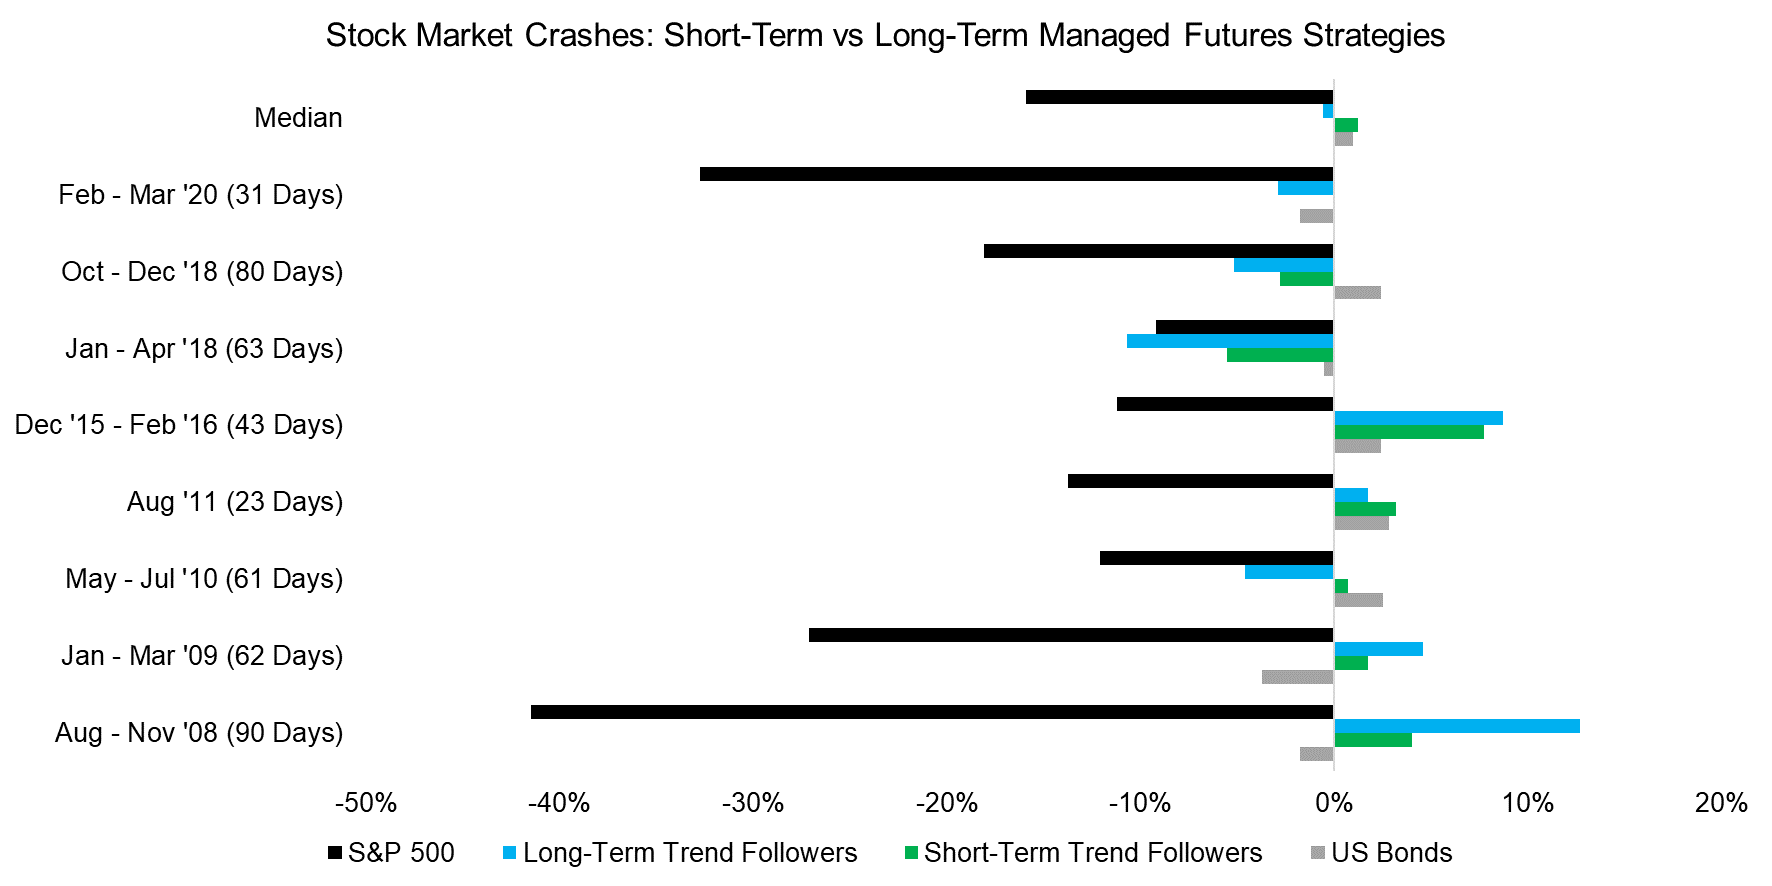 Stock Market Crashes Short-Term vs Long-Term Managed Futures Strategies